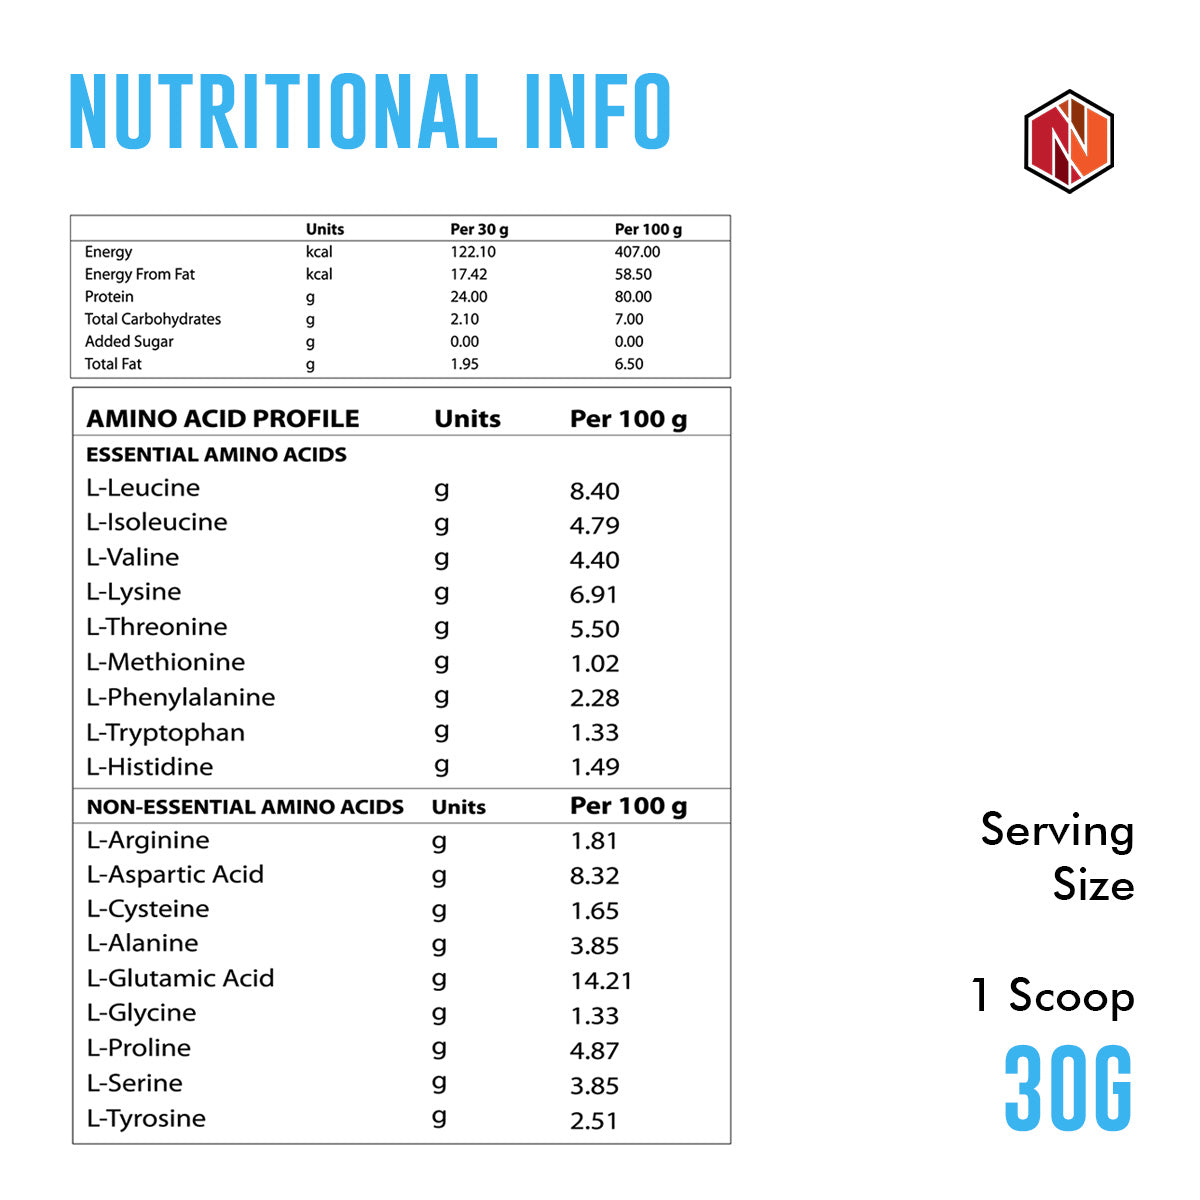 Nutritional Info of Raw Whey Protein